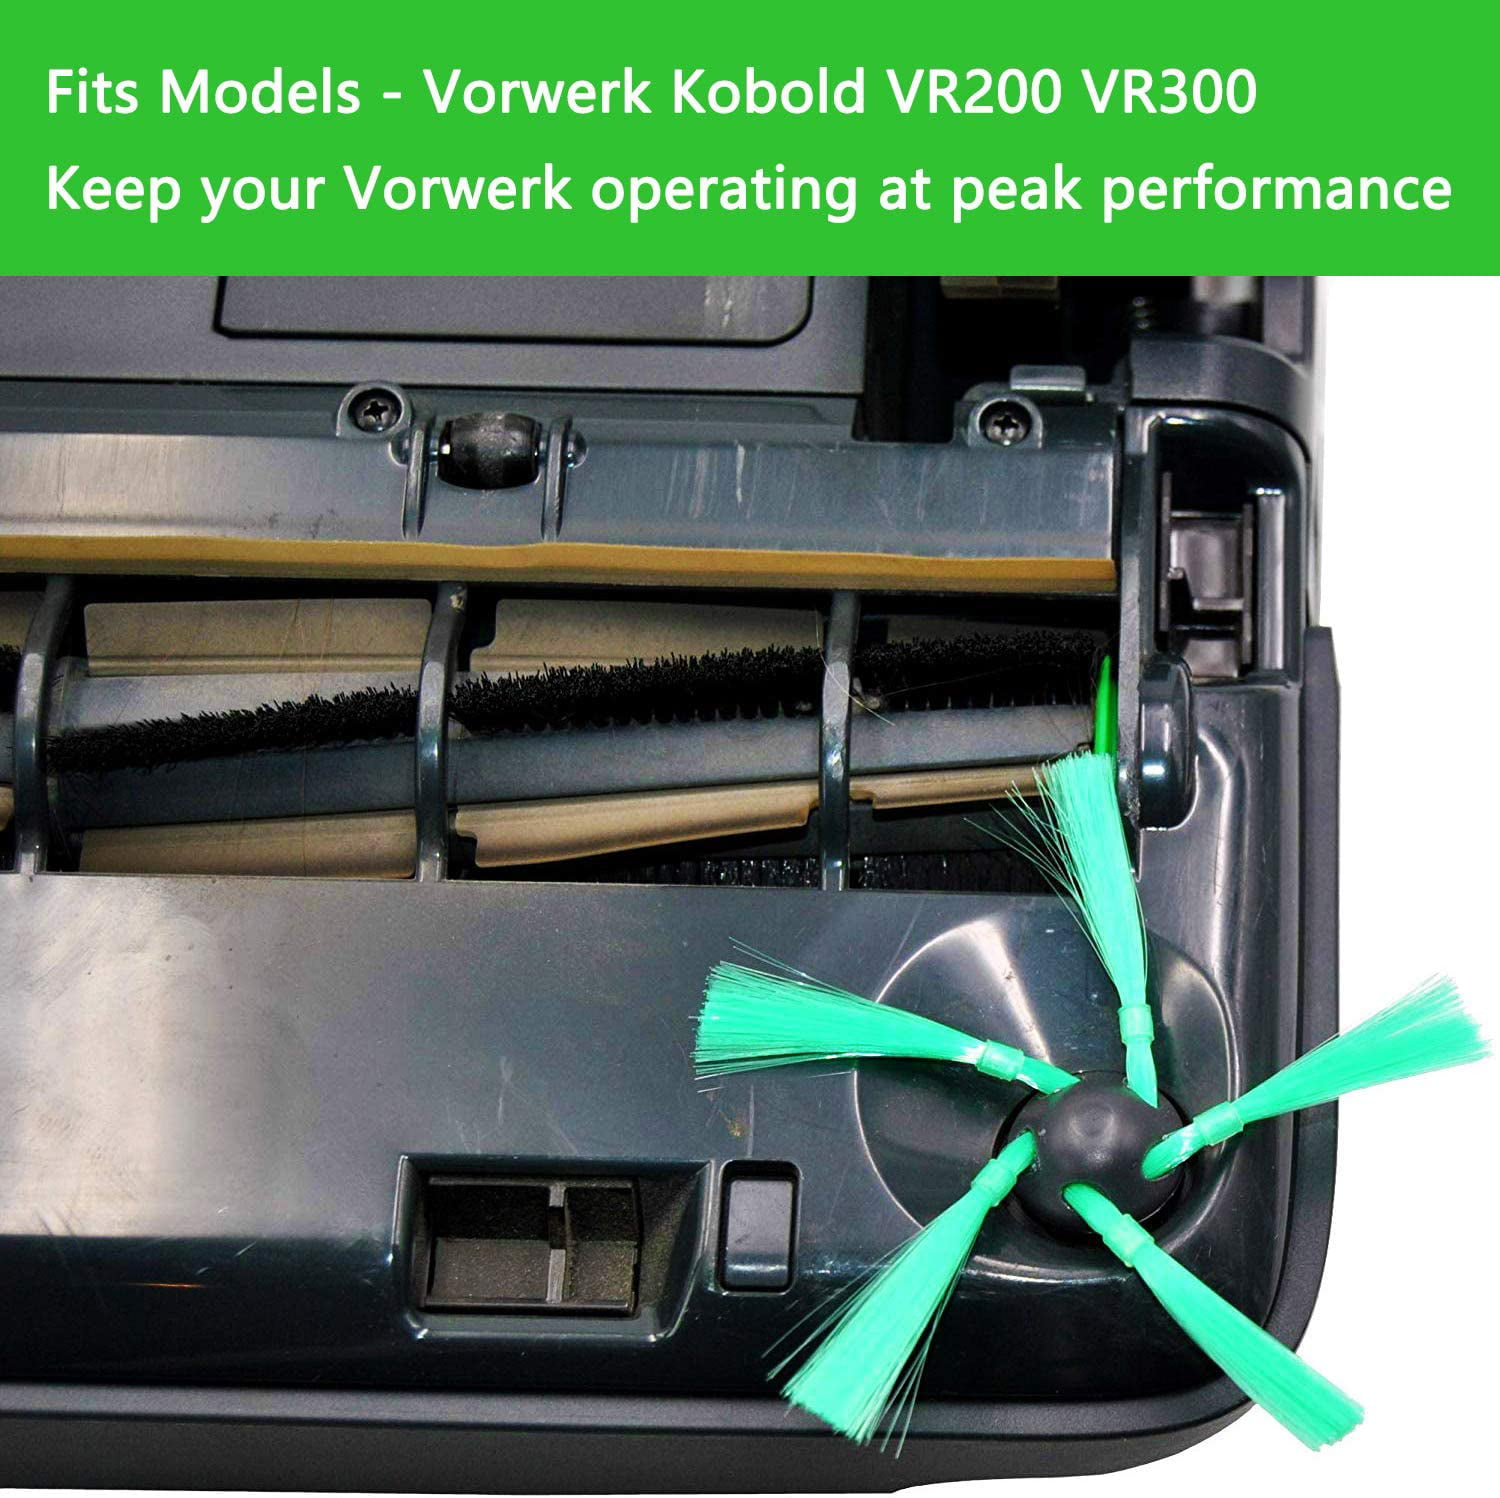 3 HEPA Allergy efficiency filter suitable for Vorwerk Kobold VR300 VR 300 